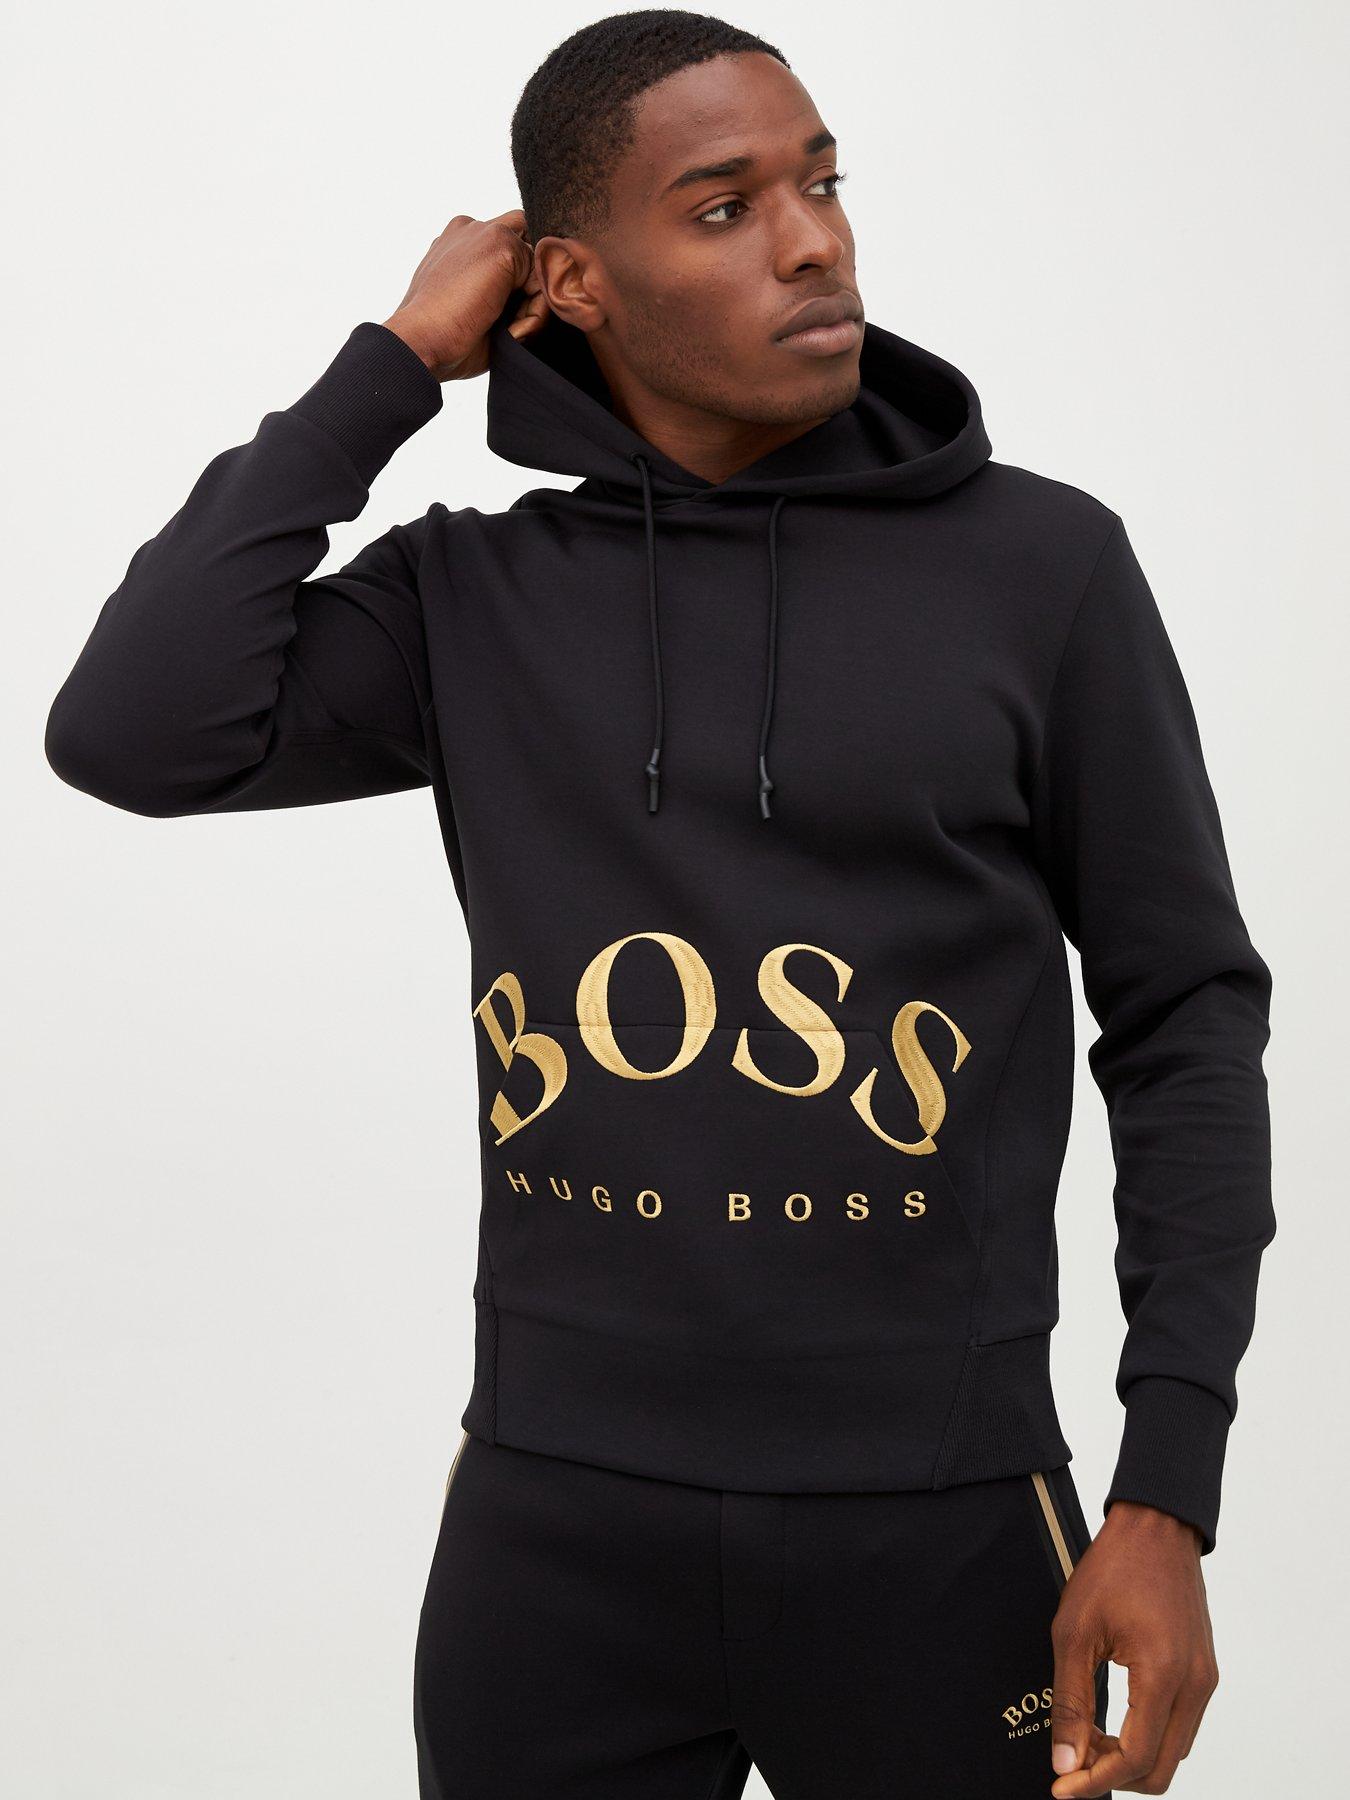 hugo boss black and gold sweatshirt